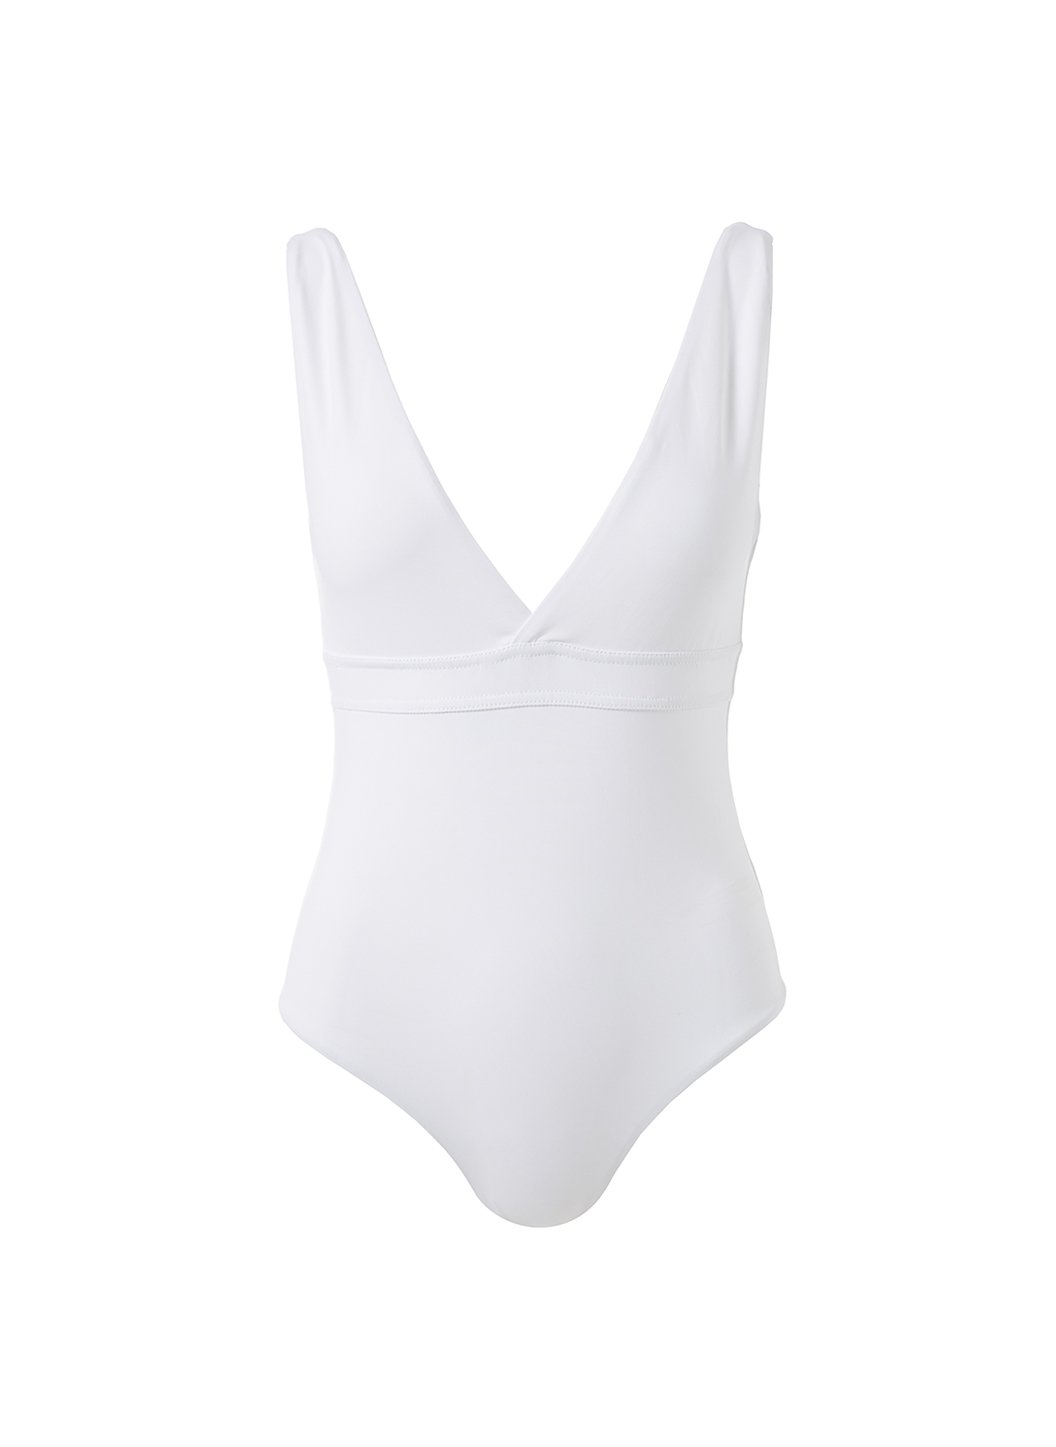 pomepii white v neck over the shoulder swimsuit Cutout